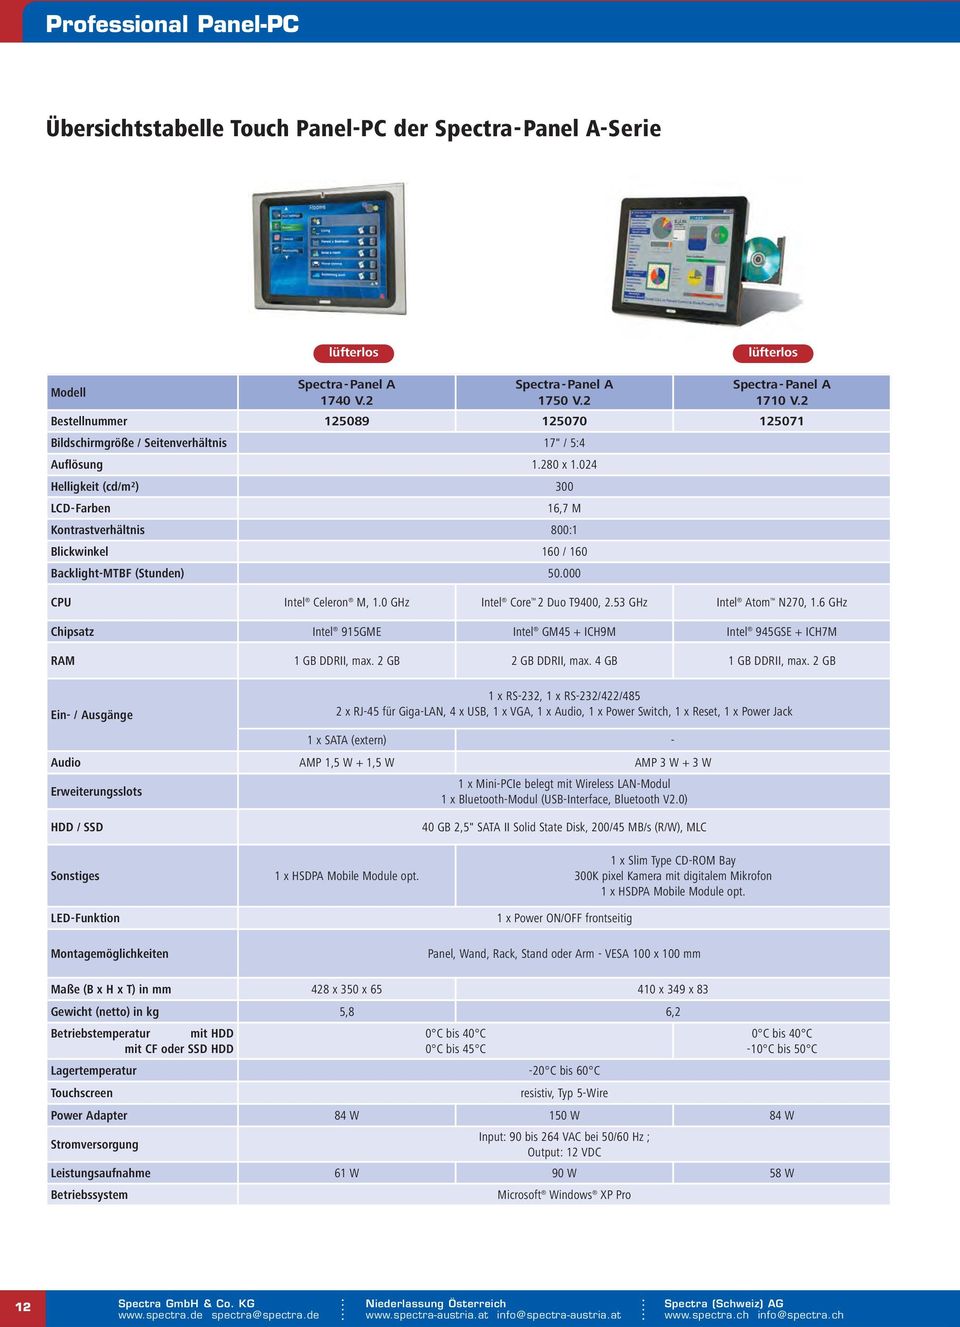 024 Helligkeit (cd/m²) 300 LCD-Farben 16,7 M Kontrastverhältnis 800:1 Blickwinkel 160 / 160 Backlight-MTBF (Stunden) 50.000 CPU Intel Celeron M, 1.0 GHz Intel Core 2 Duo T9400, 2.